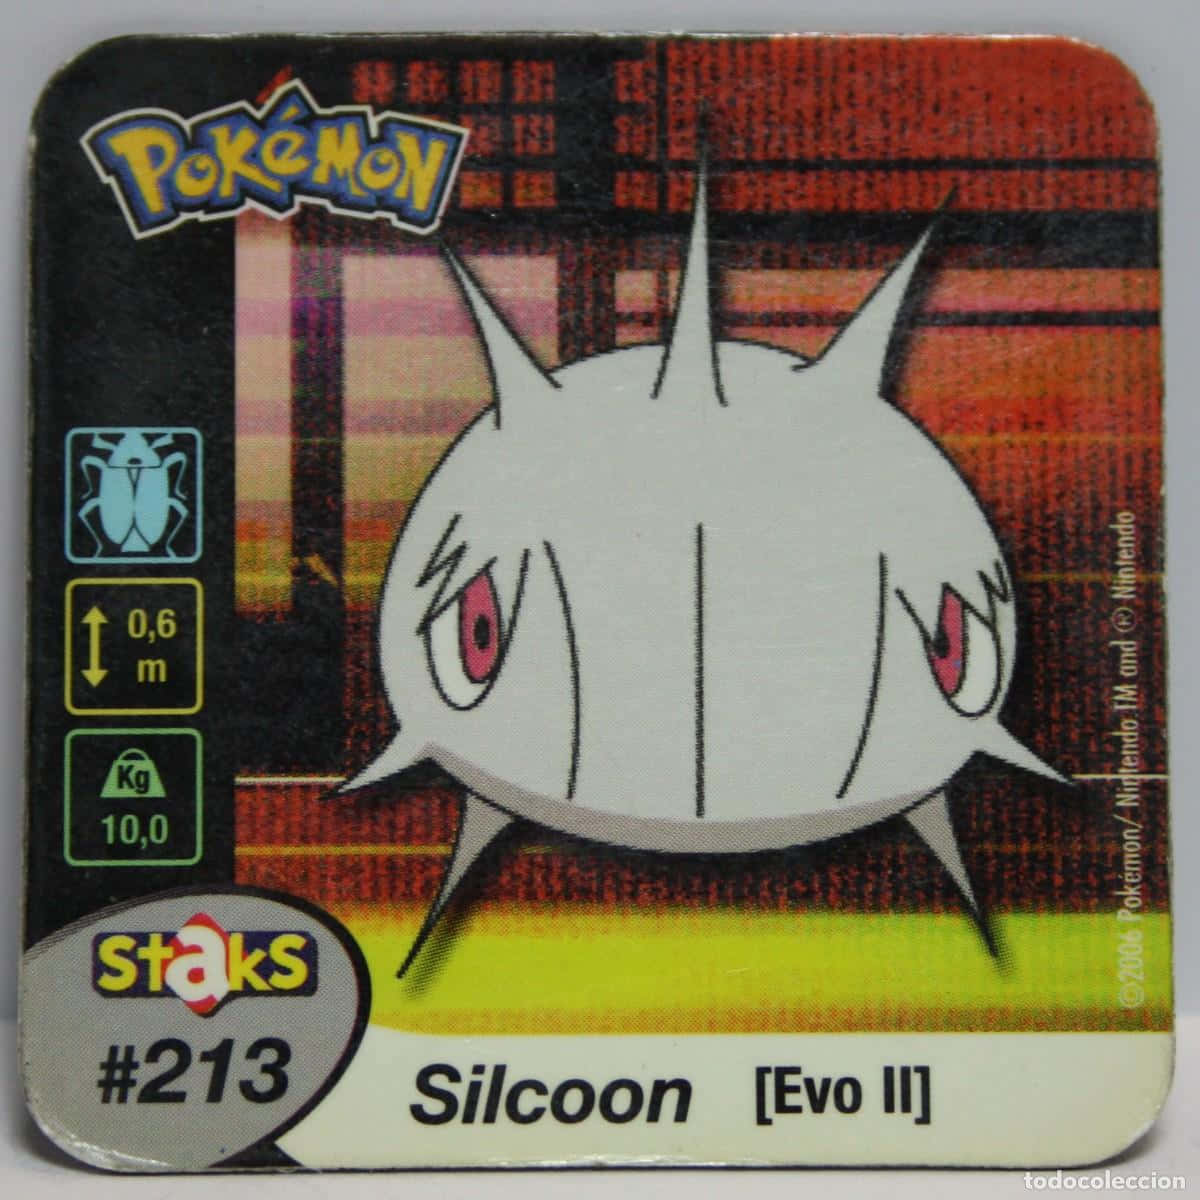 Silcoon Pokémon Staks Wallpaper